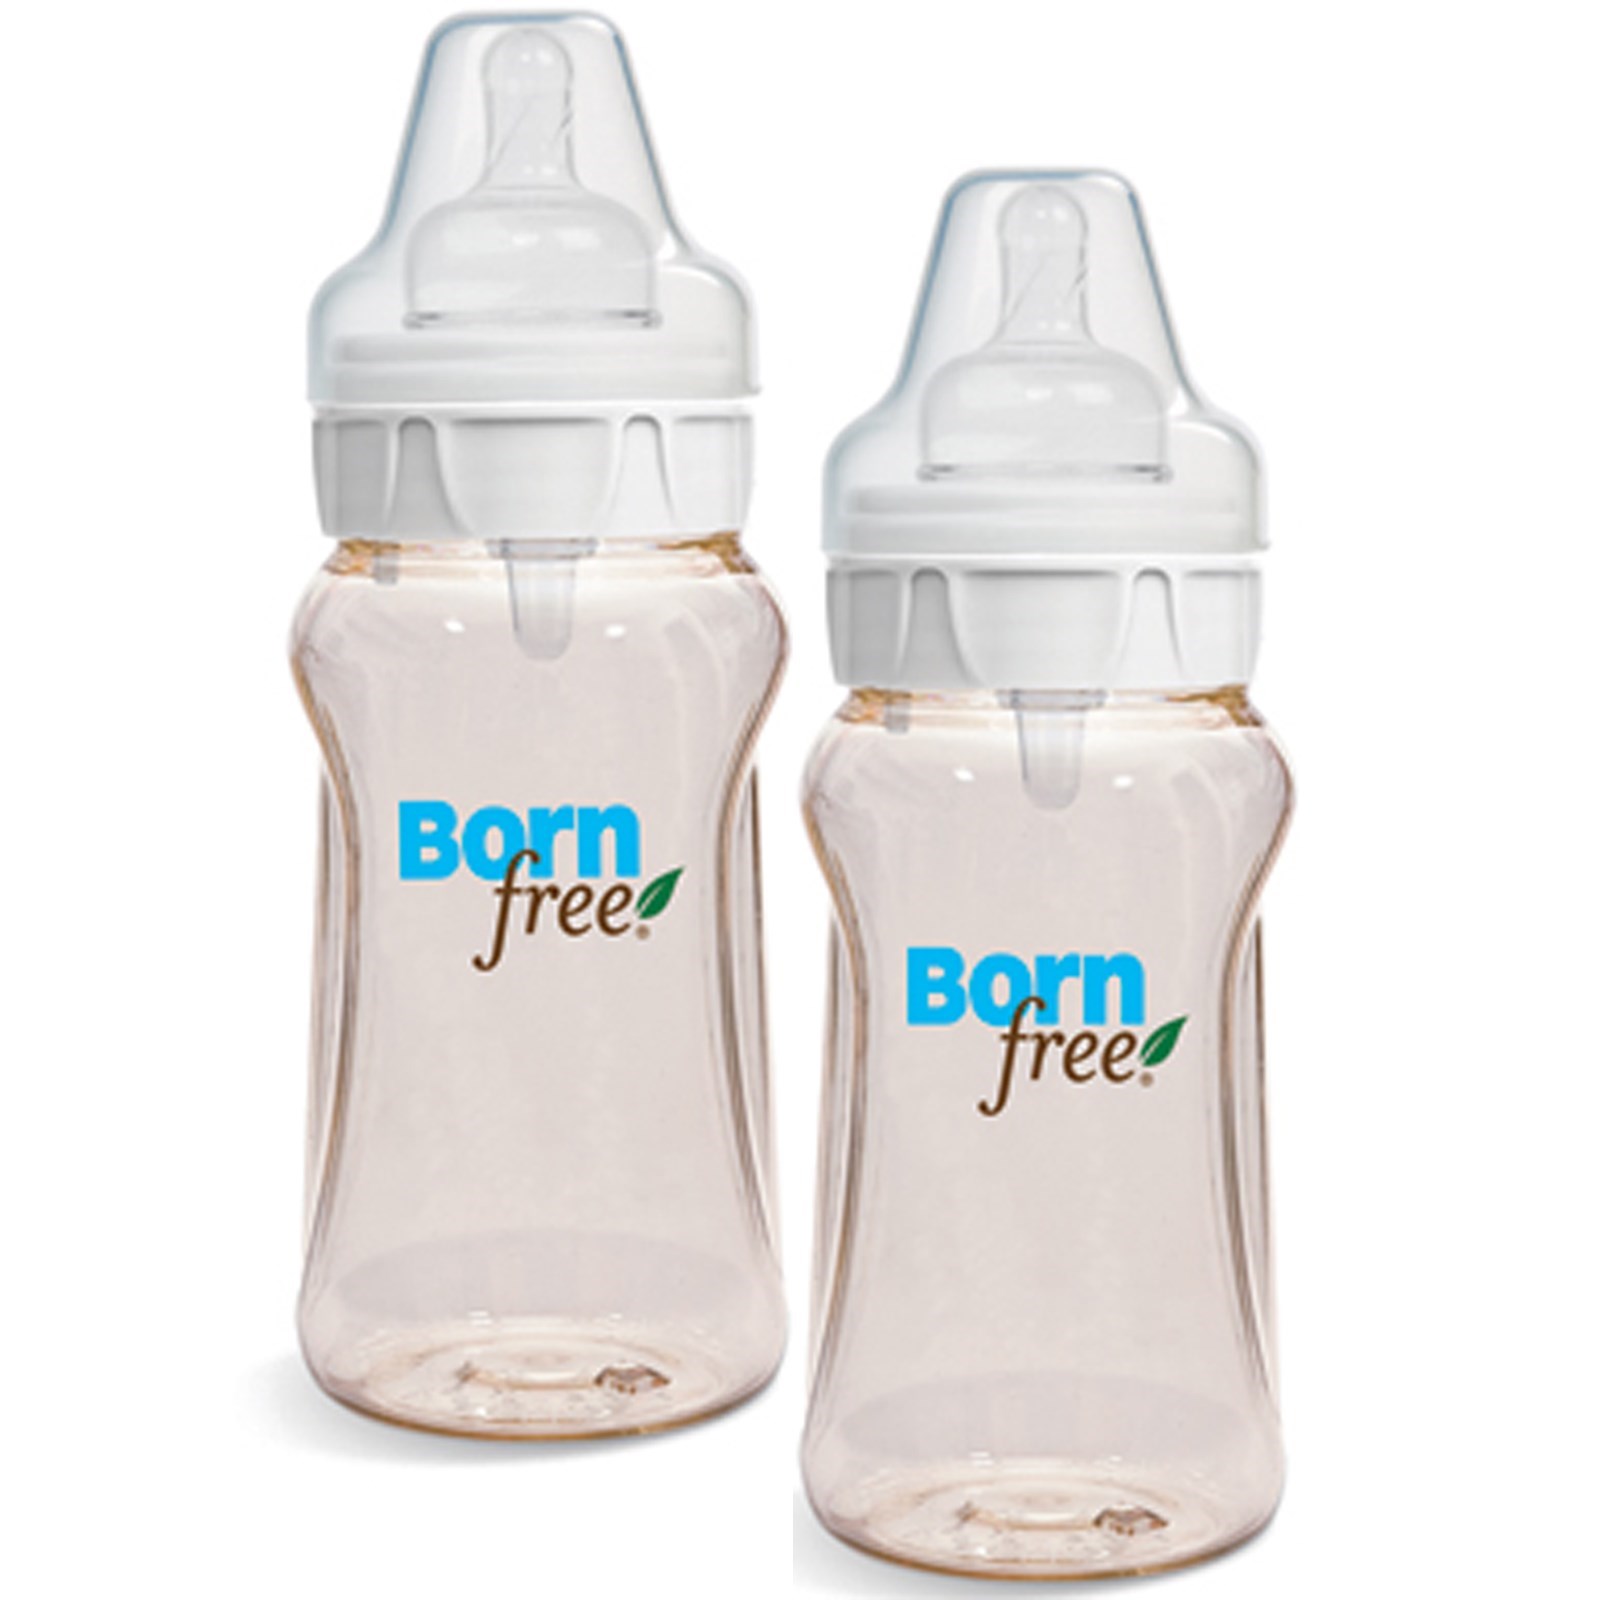 born free bottles